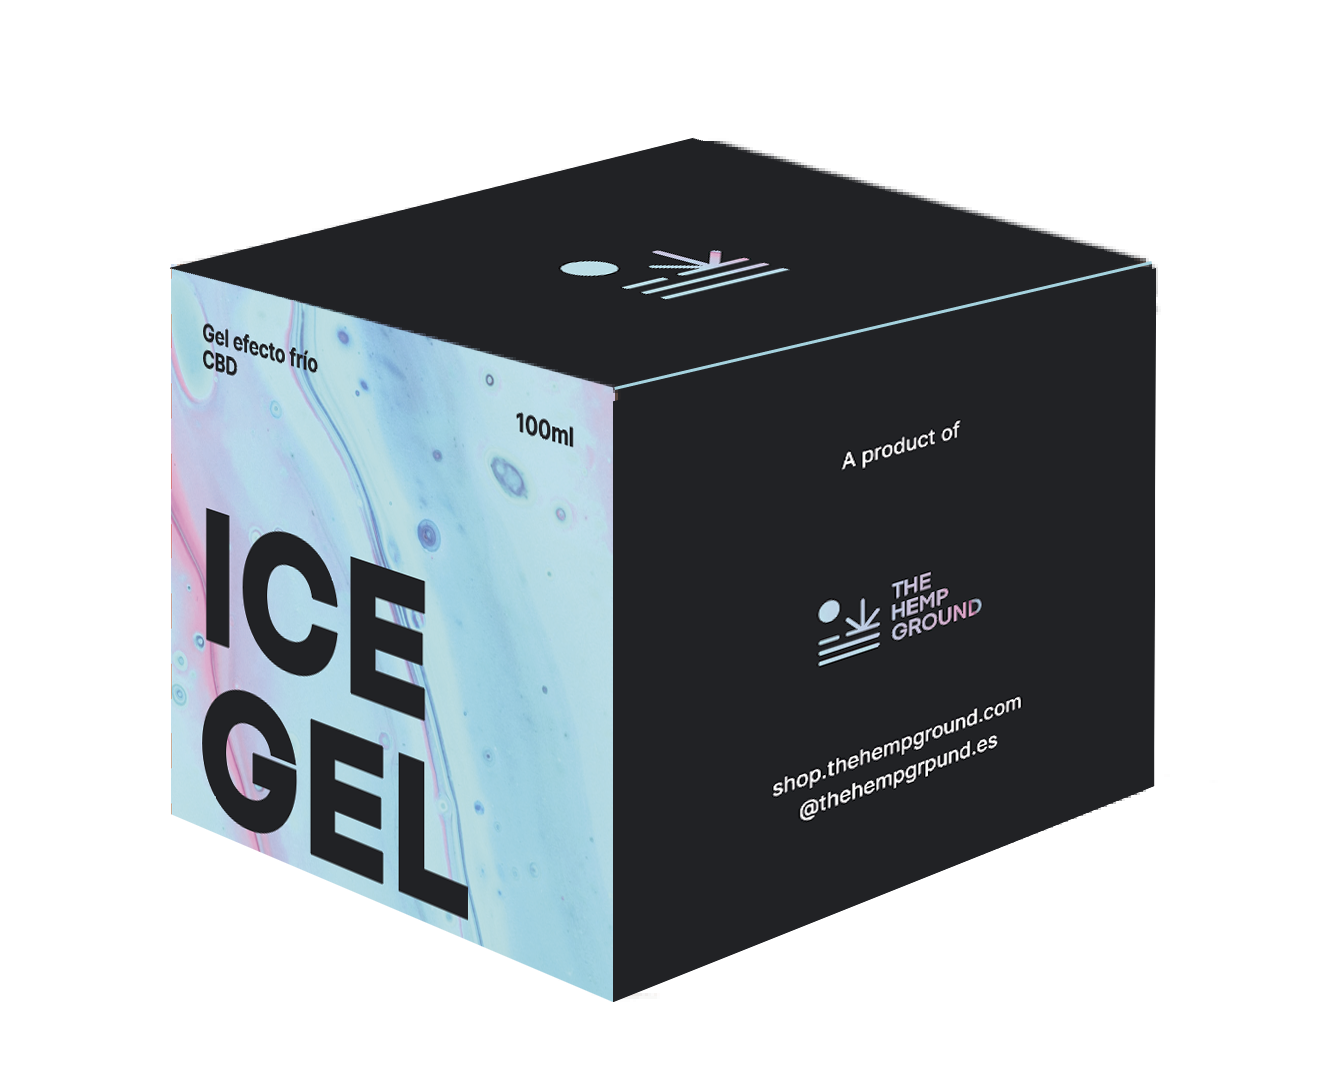 Emballage de ice-gel de cbd